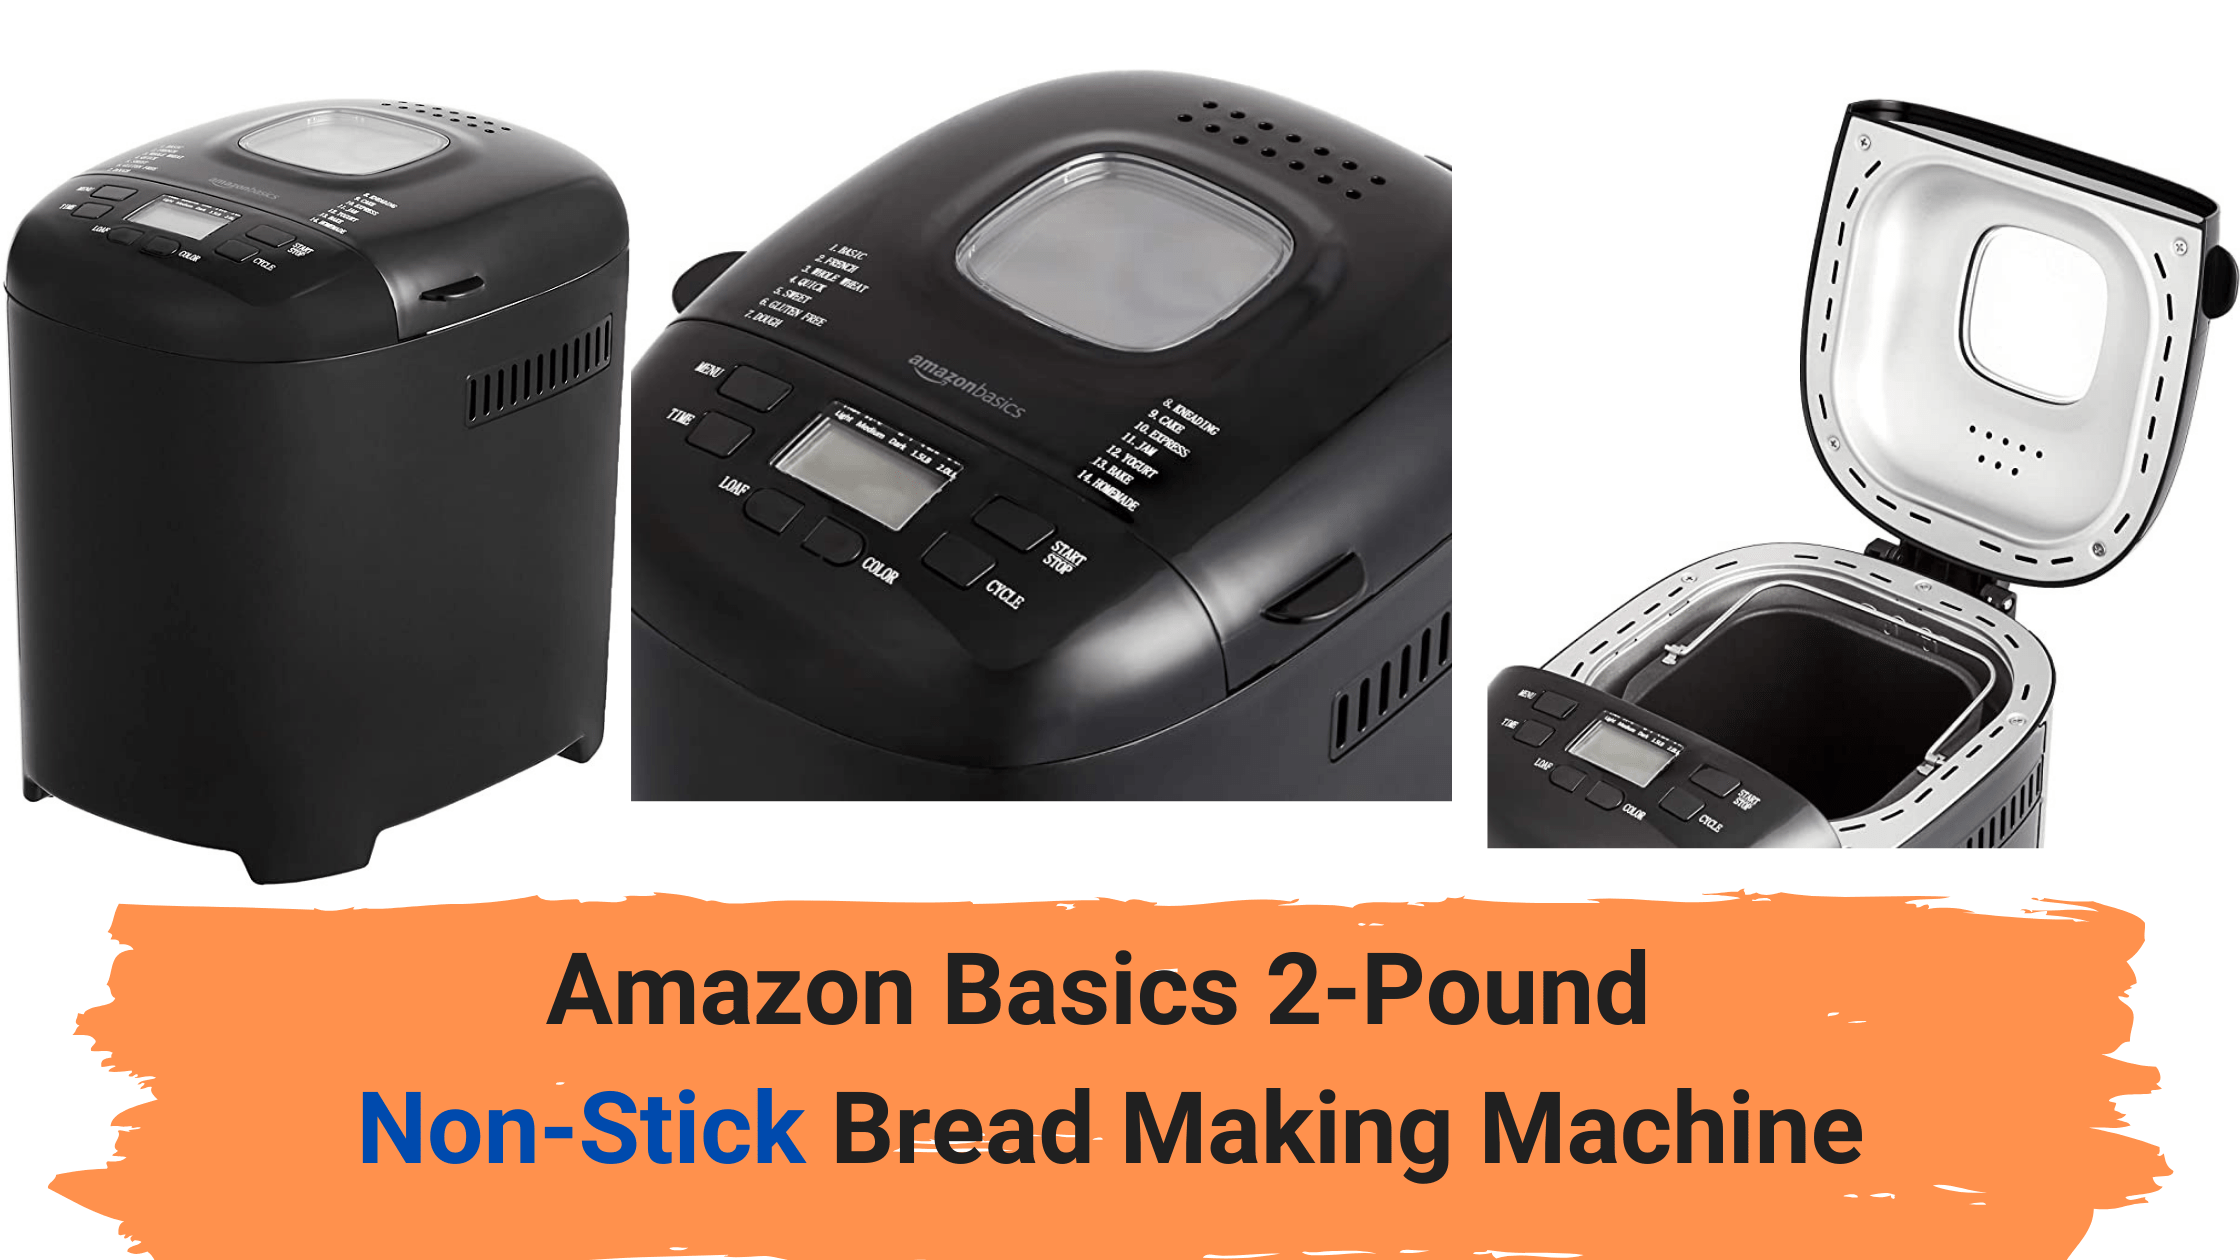 Amazon Basics 2-Pound Non-Stick Bread Making Machine